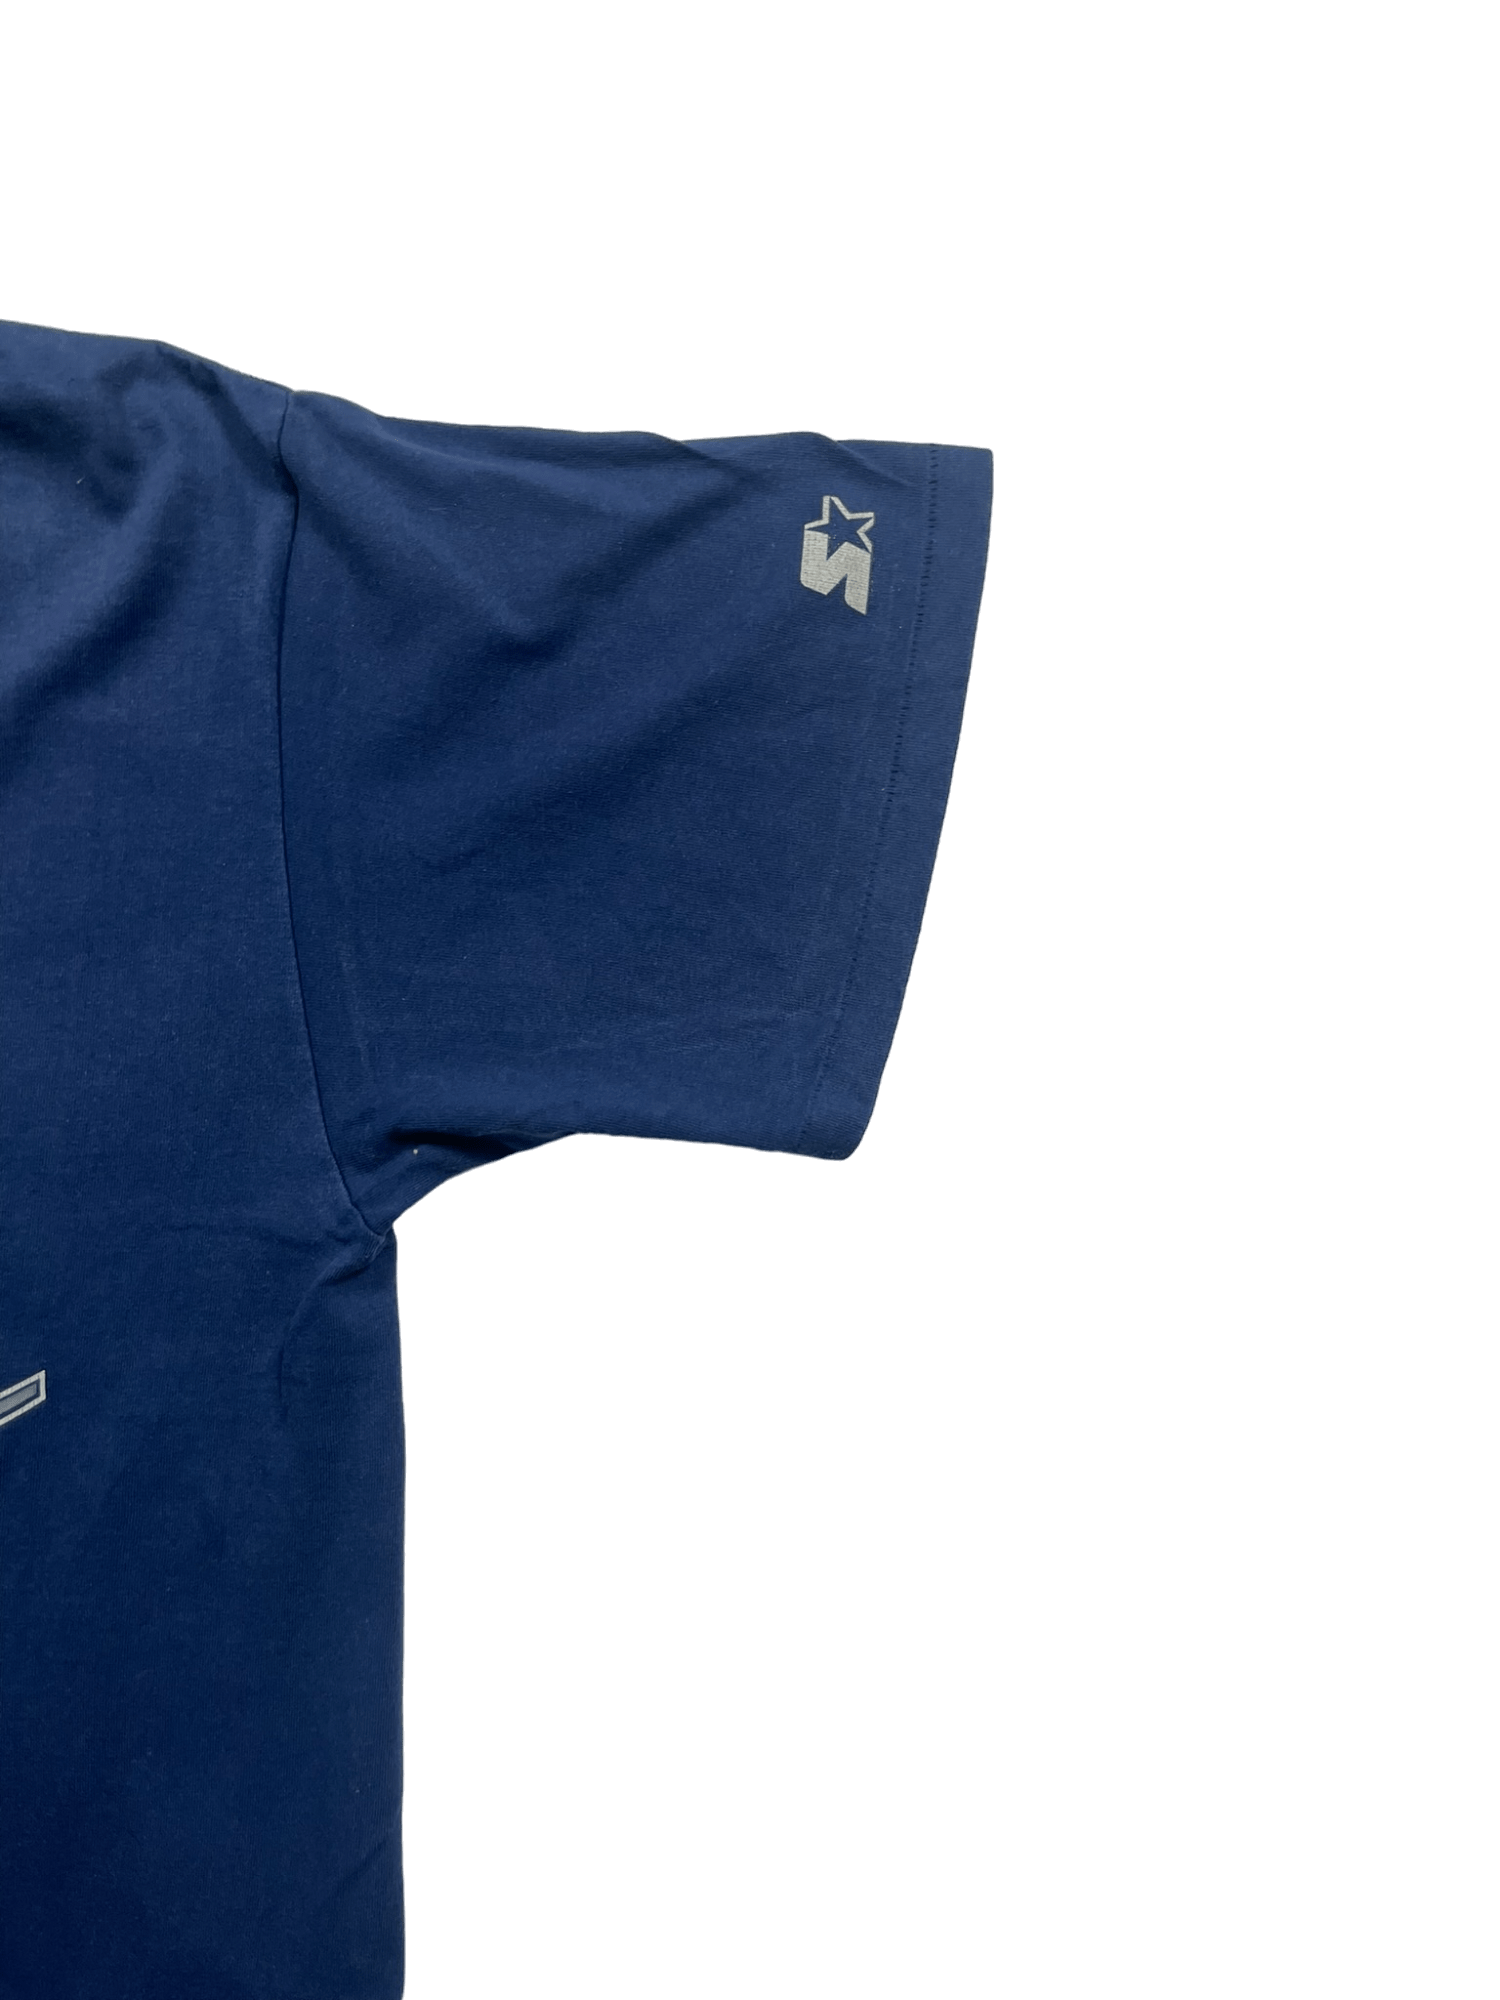 The Vintage Racks T-Shirt Georgetown Hoyas - L